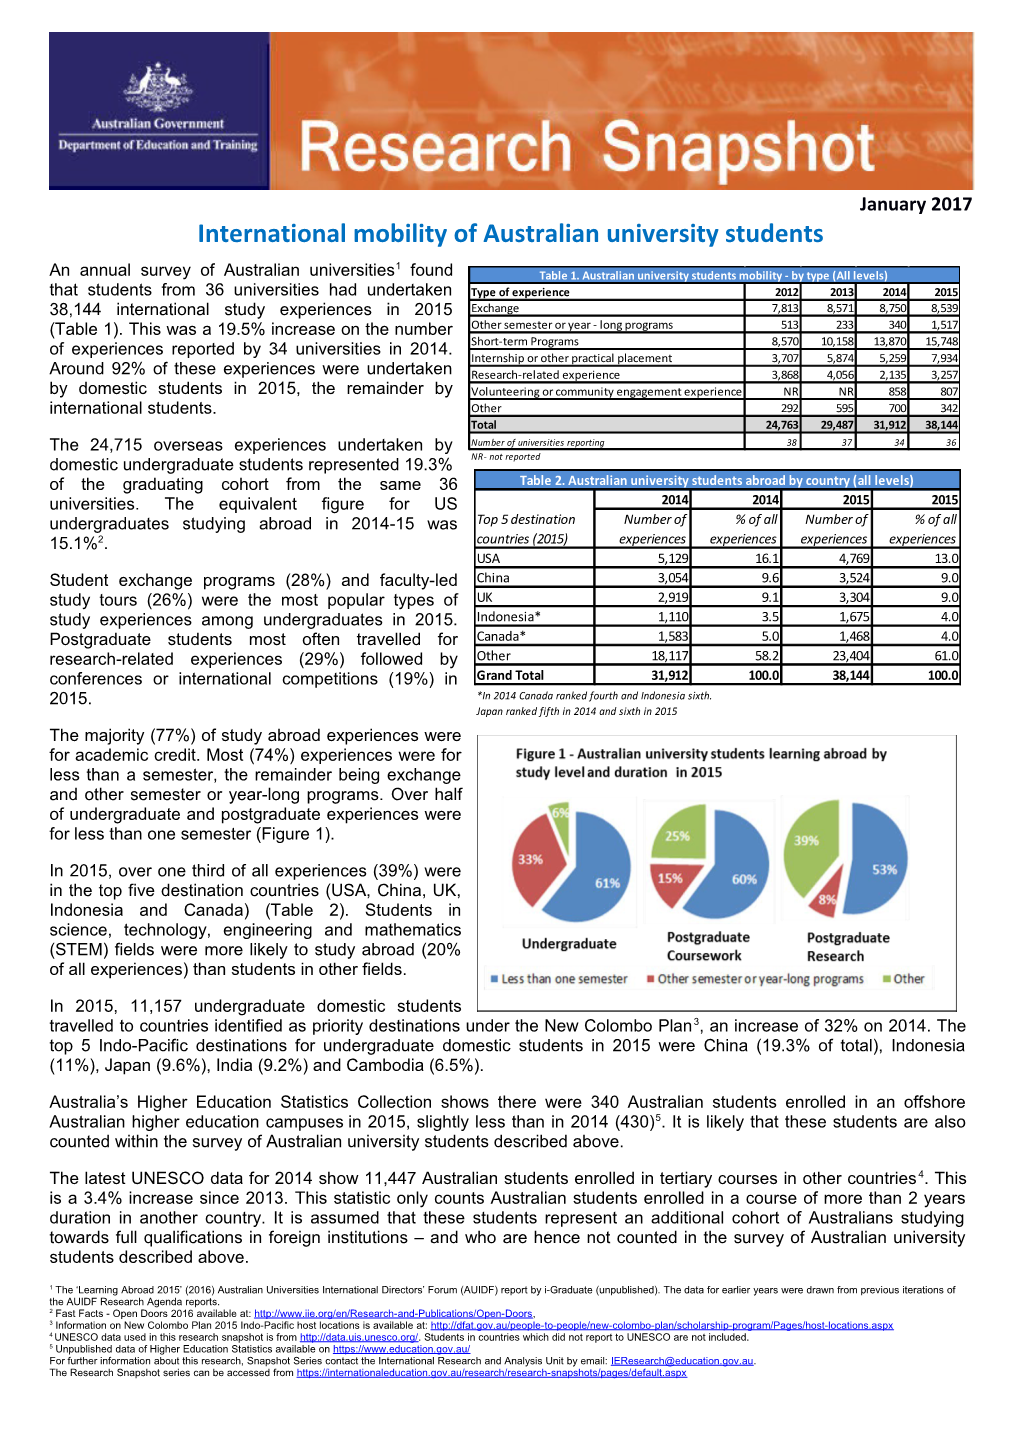 International Mobility of Australian University Students